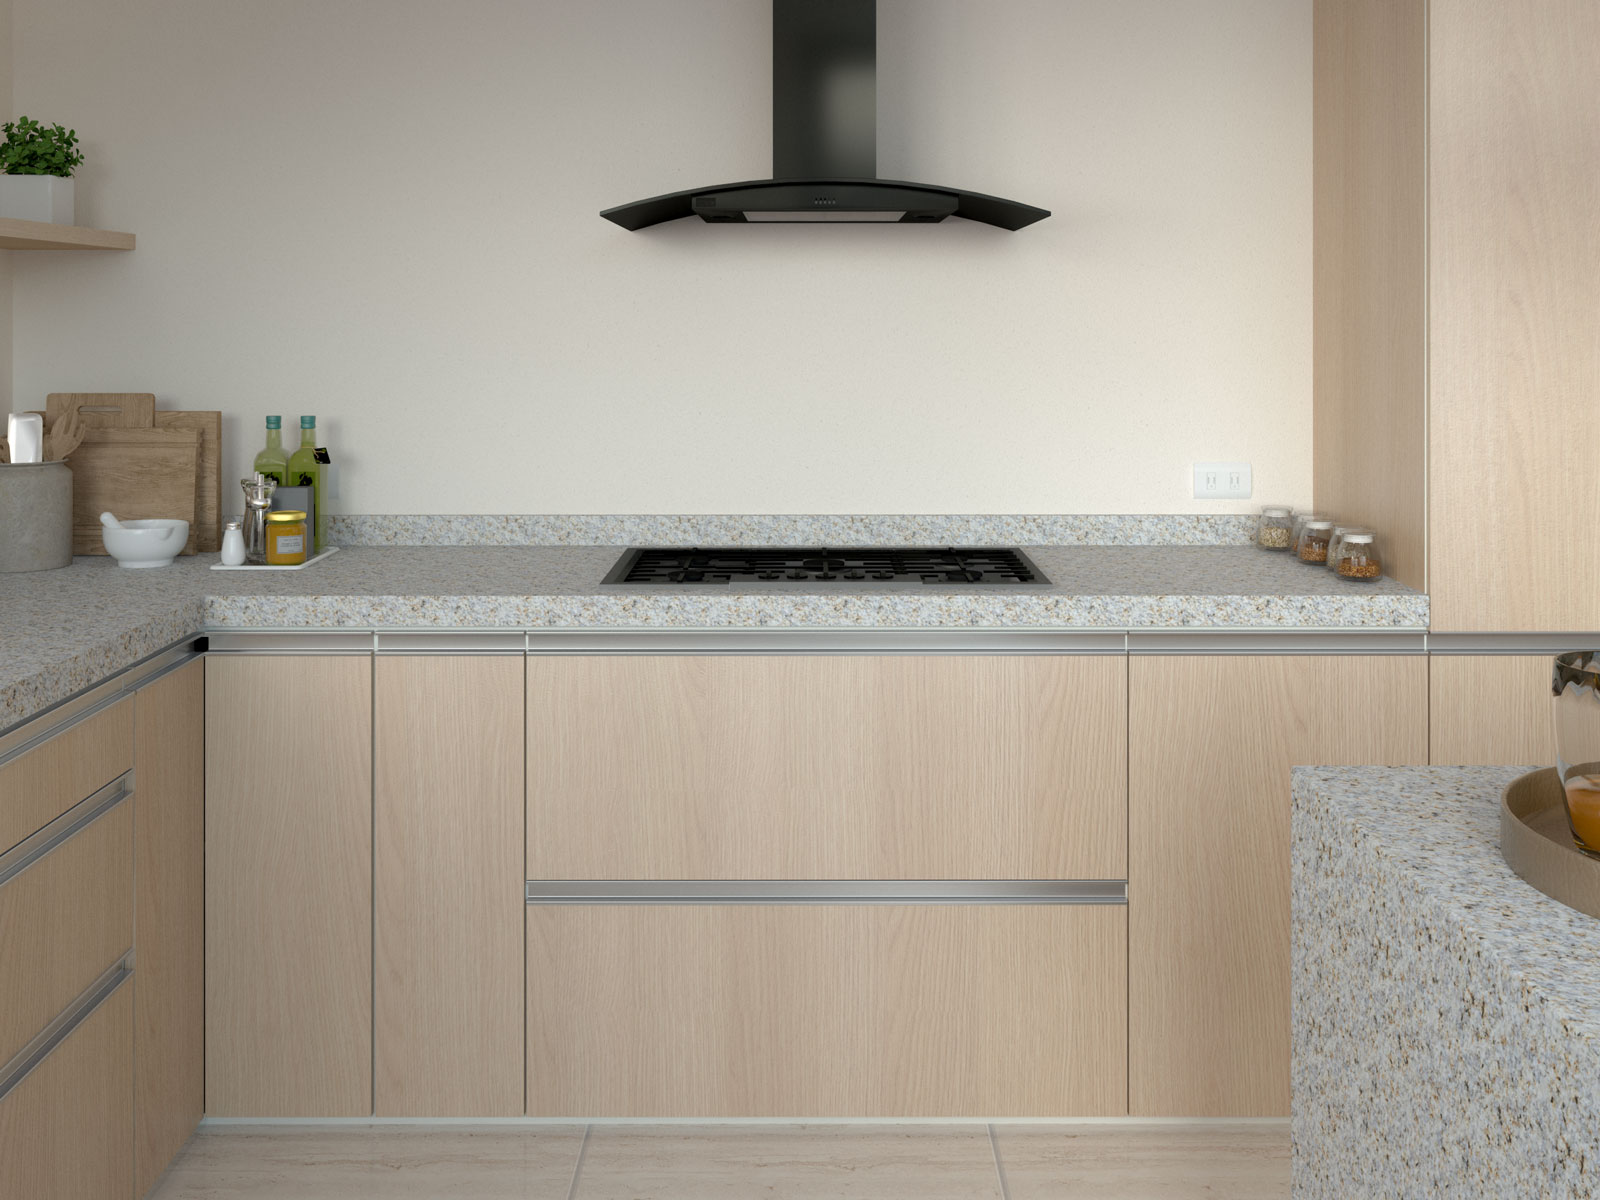 White sardinia granite countertops with oak kitchen cabinets